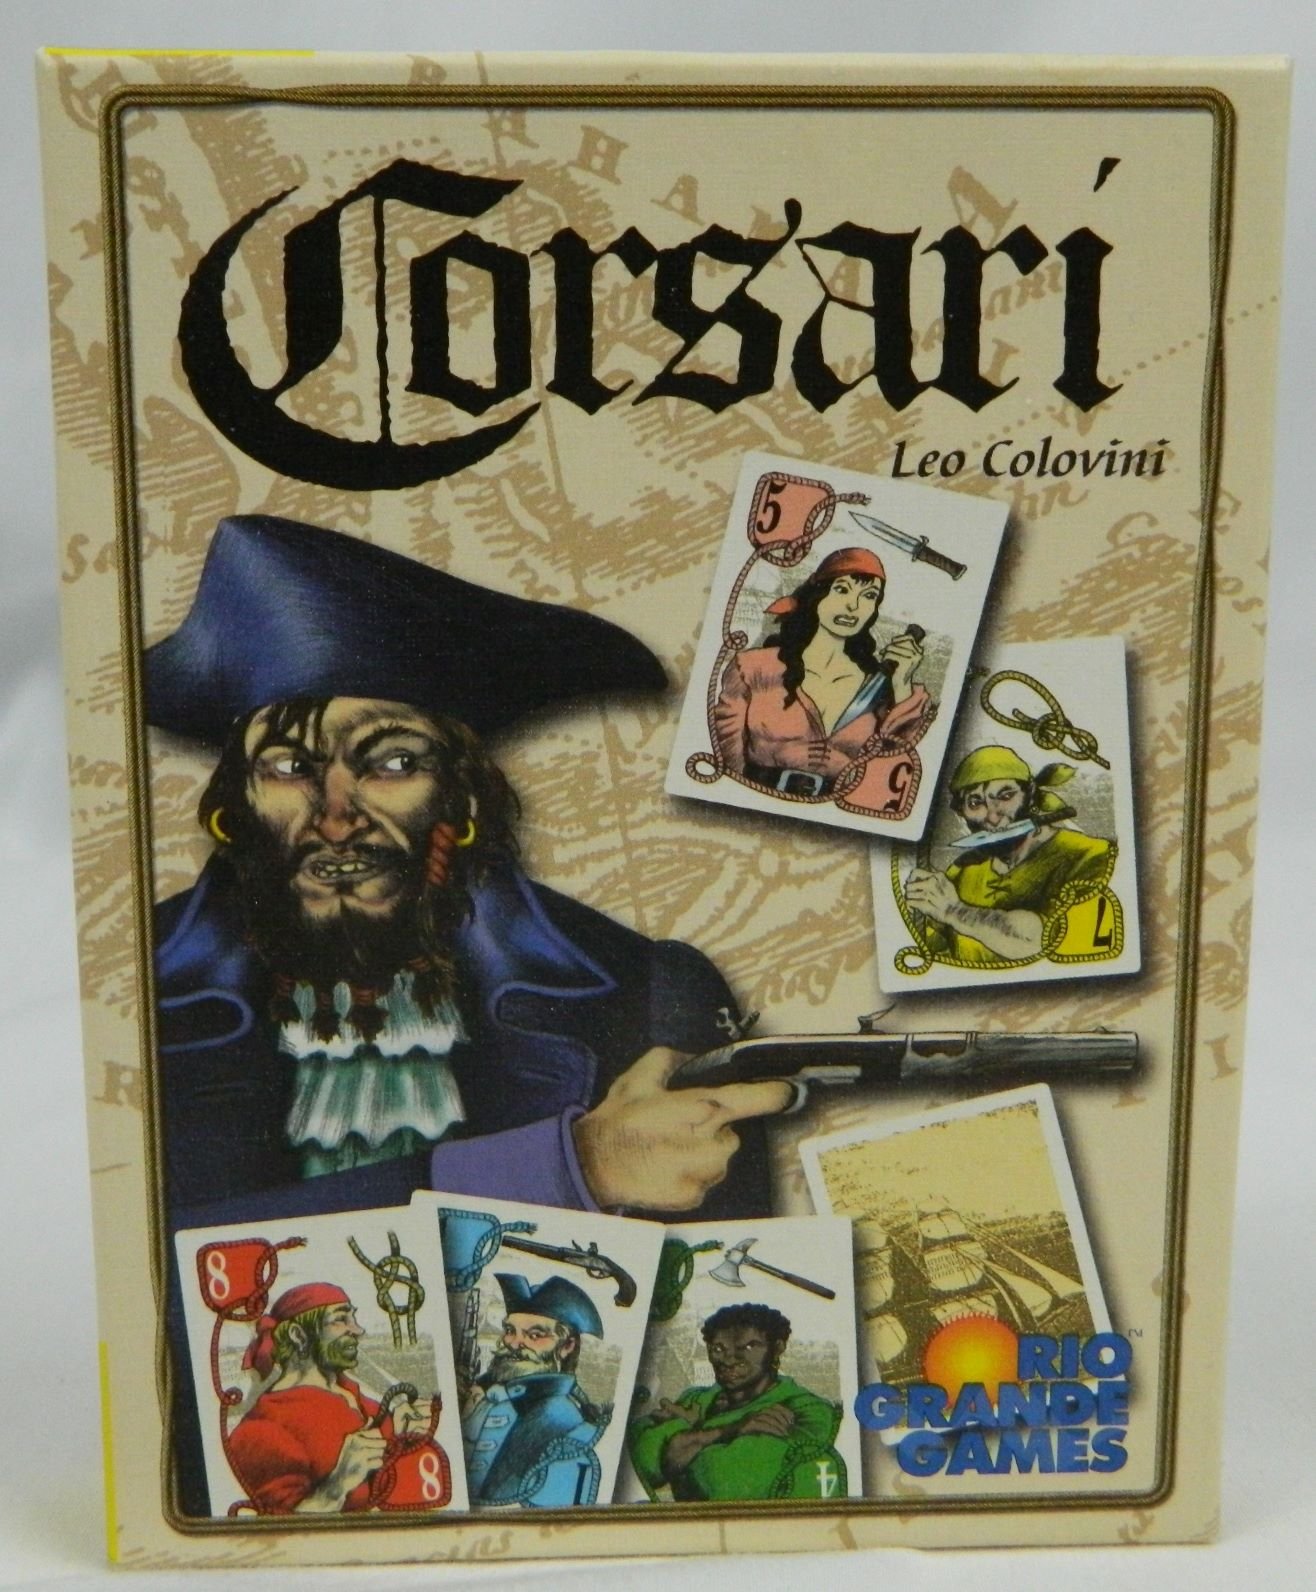 Corsari AKA I Go! Card Game Review and Rules